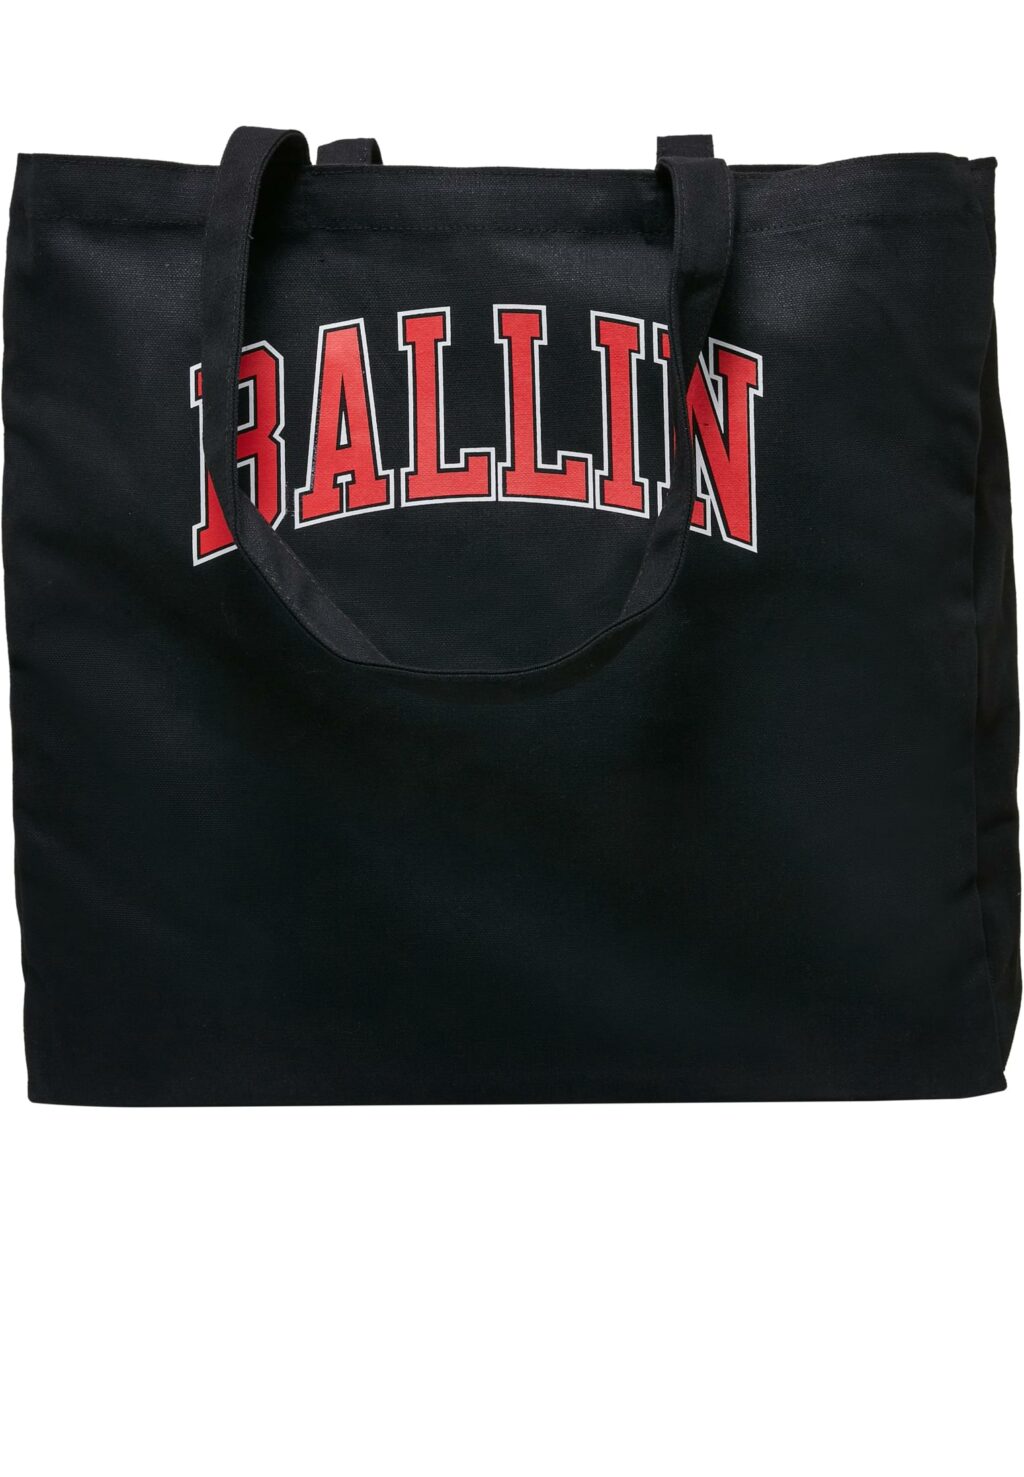 Ballin Oversize Canvas Tote Bag black one MT2277